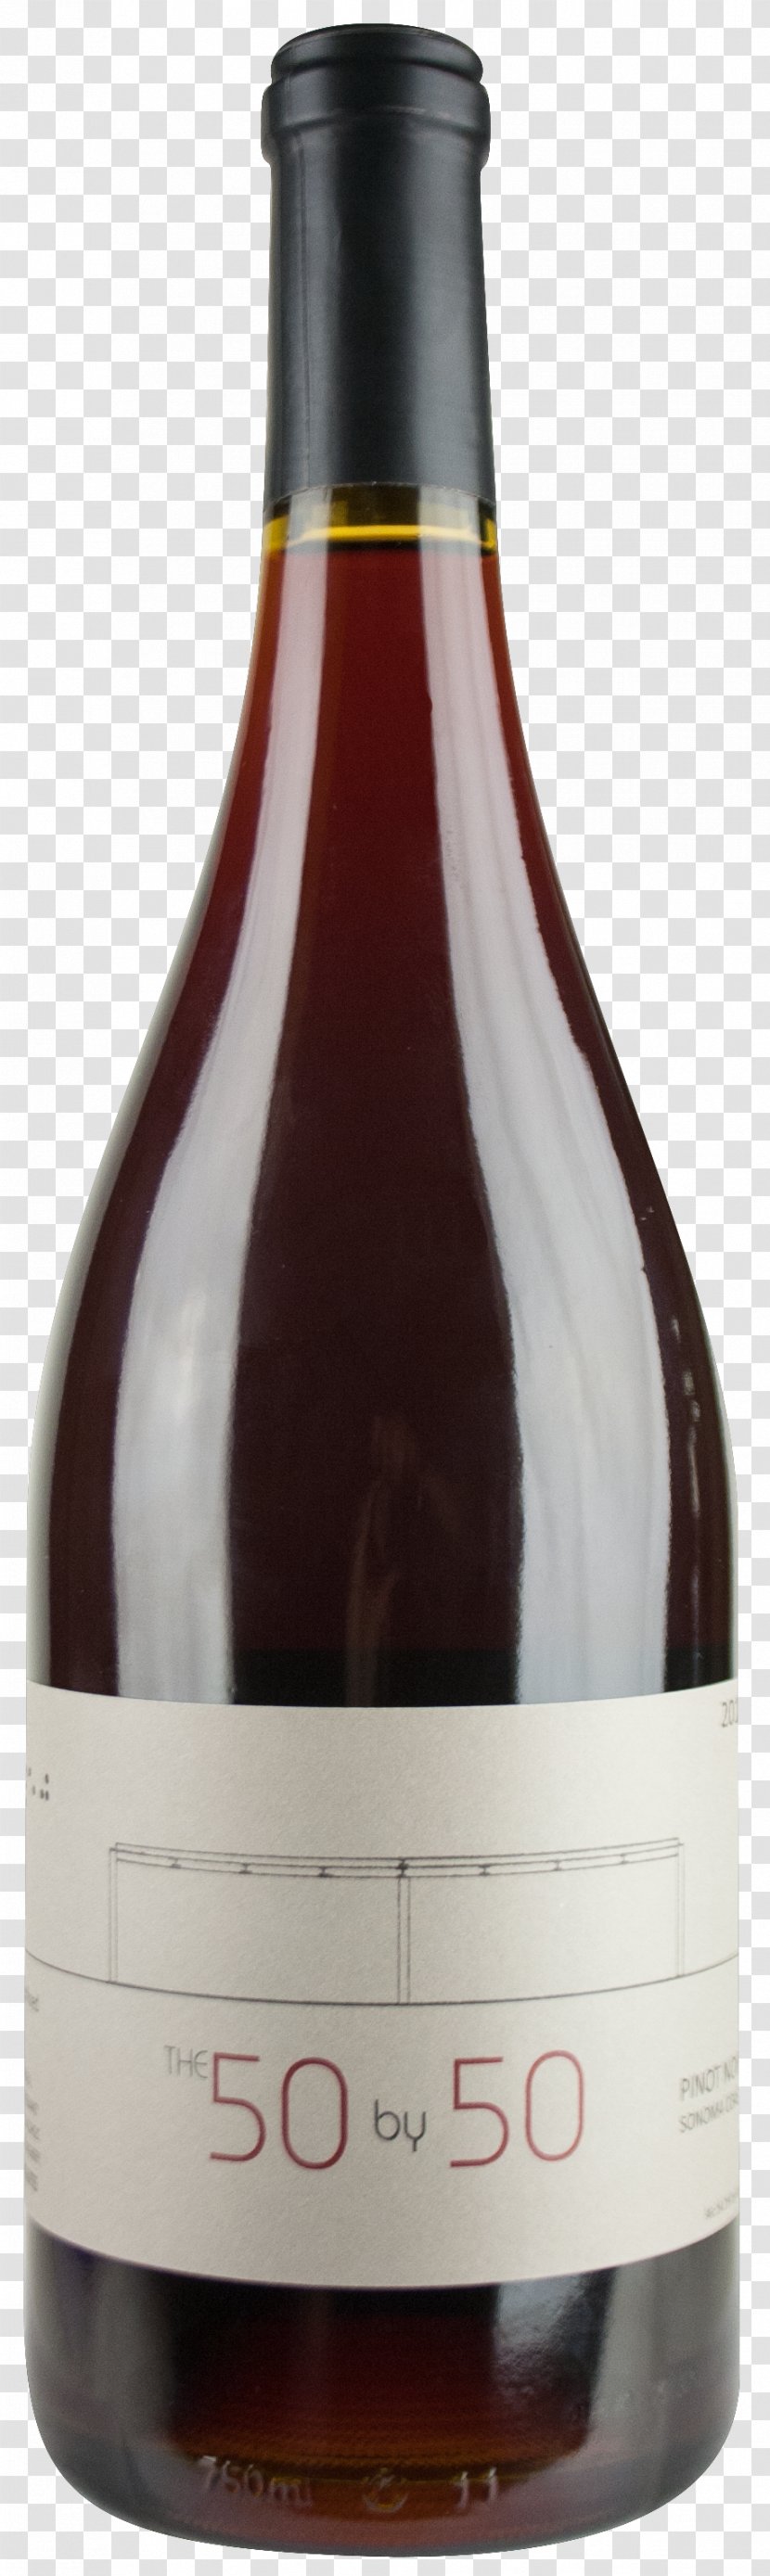 Liqueur Dessert Wine Glass Bottle - Alcoholic Beverage - Champagne Products In Kind Transparent PNG